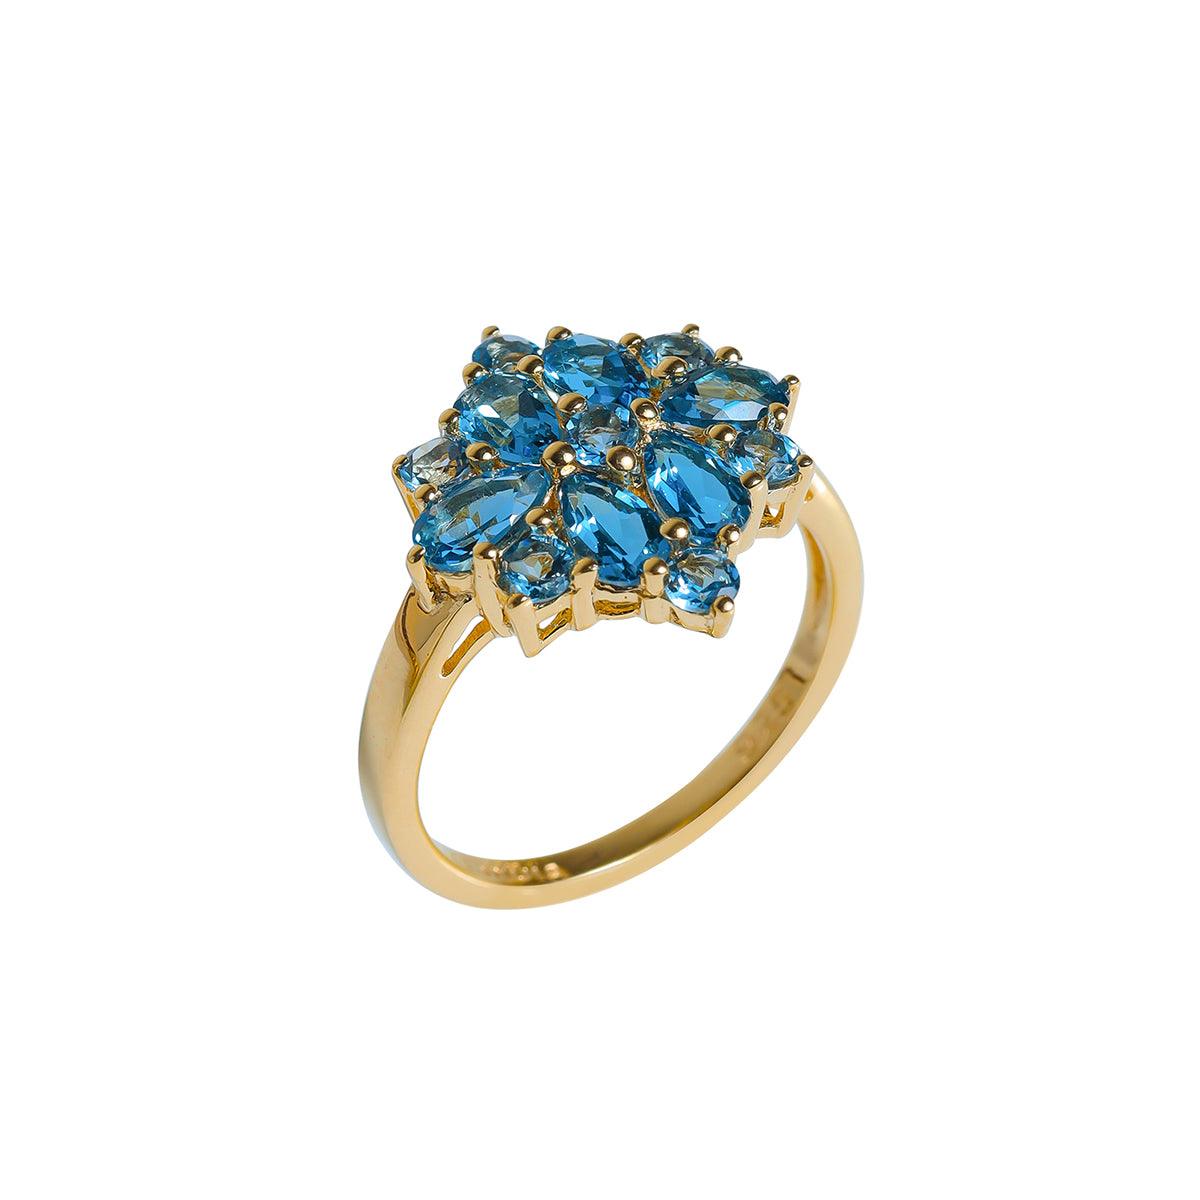 London blue Topaz Cluster Ring 14k Gold Over 925 Silver - YoTreasure